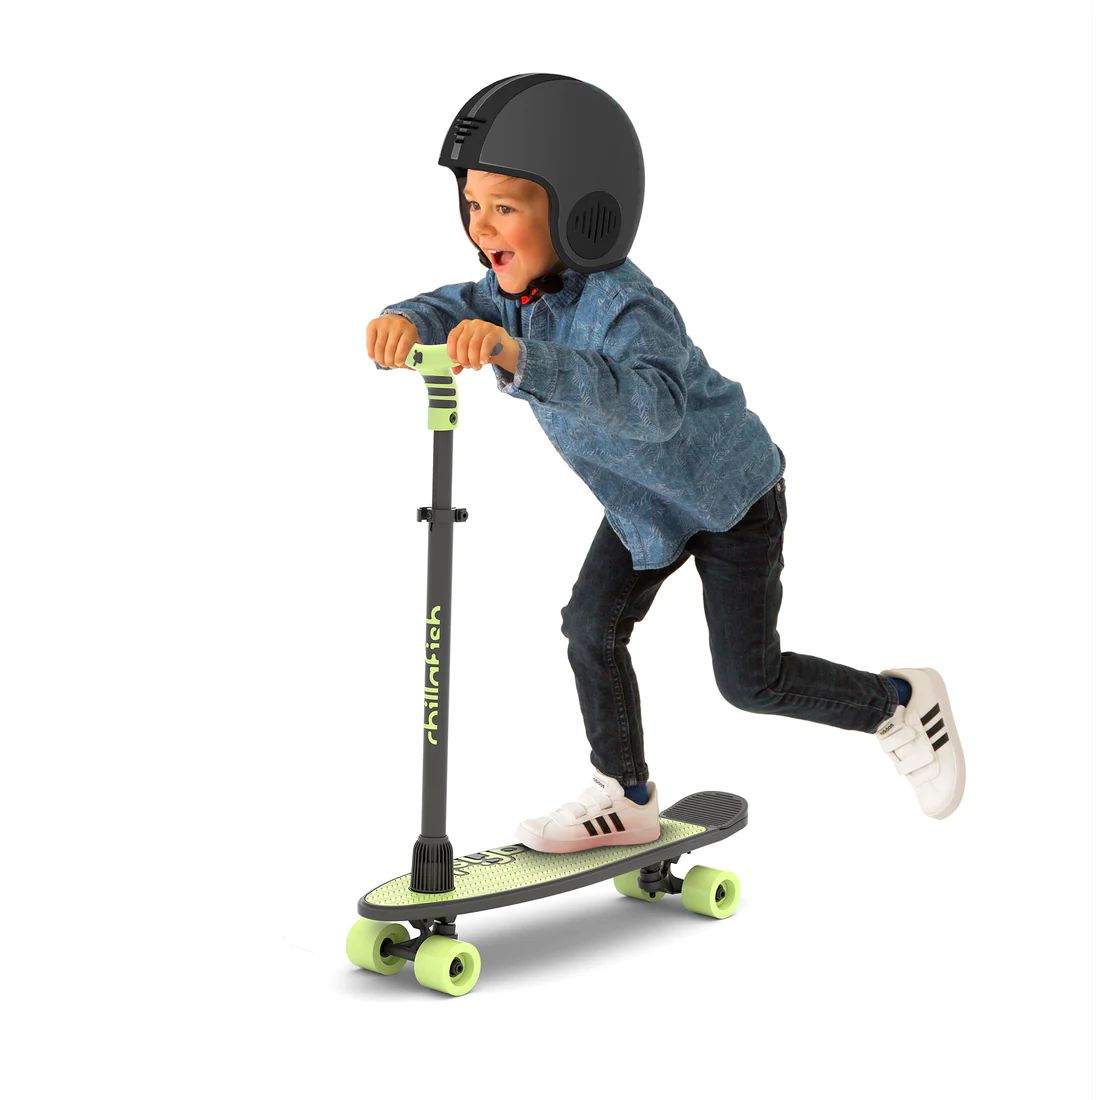 Skatieskootie 2 in 1 Skateboard and Scooter - Pistachio